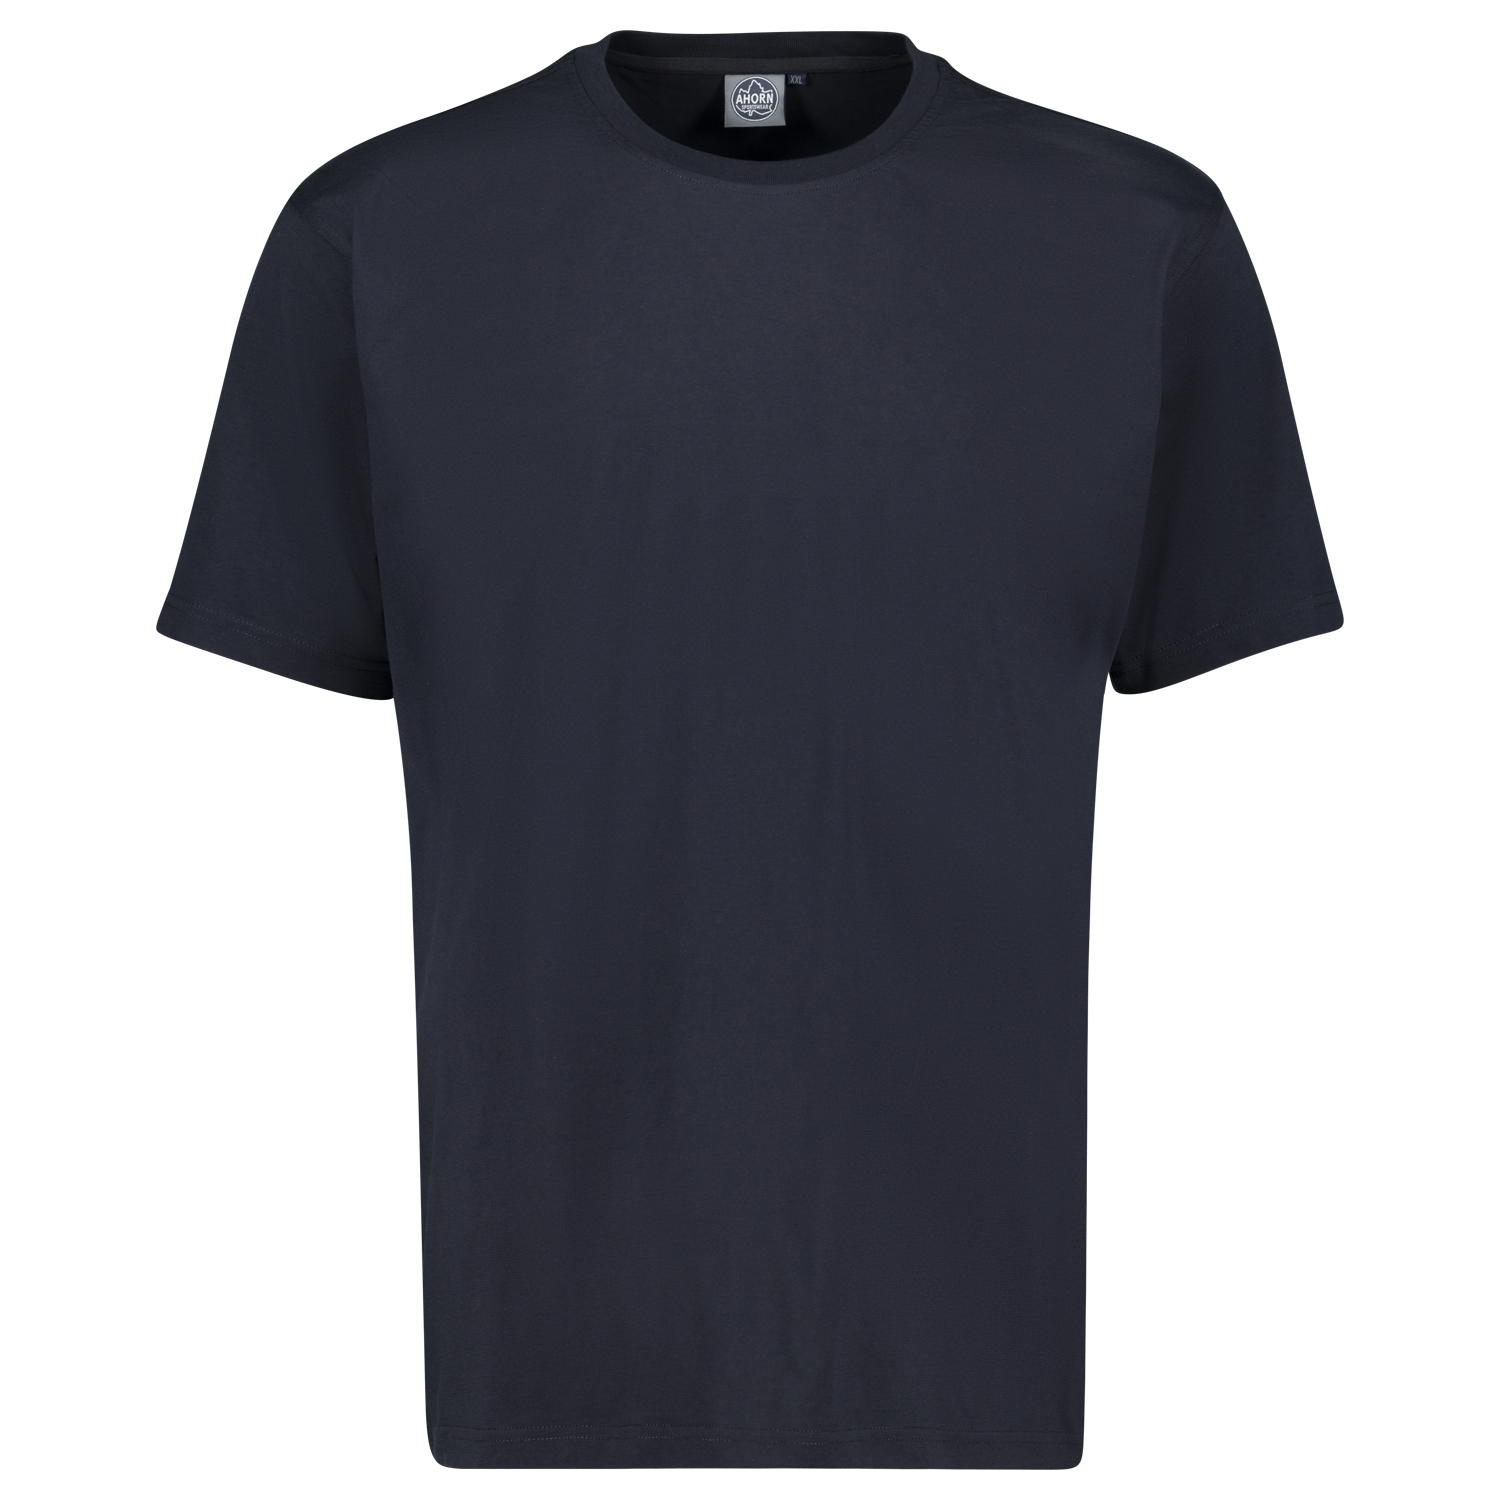 T-shirt en bleu foncé by Ahorn Sportswear en grandes tailles 2XL - 10XL